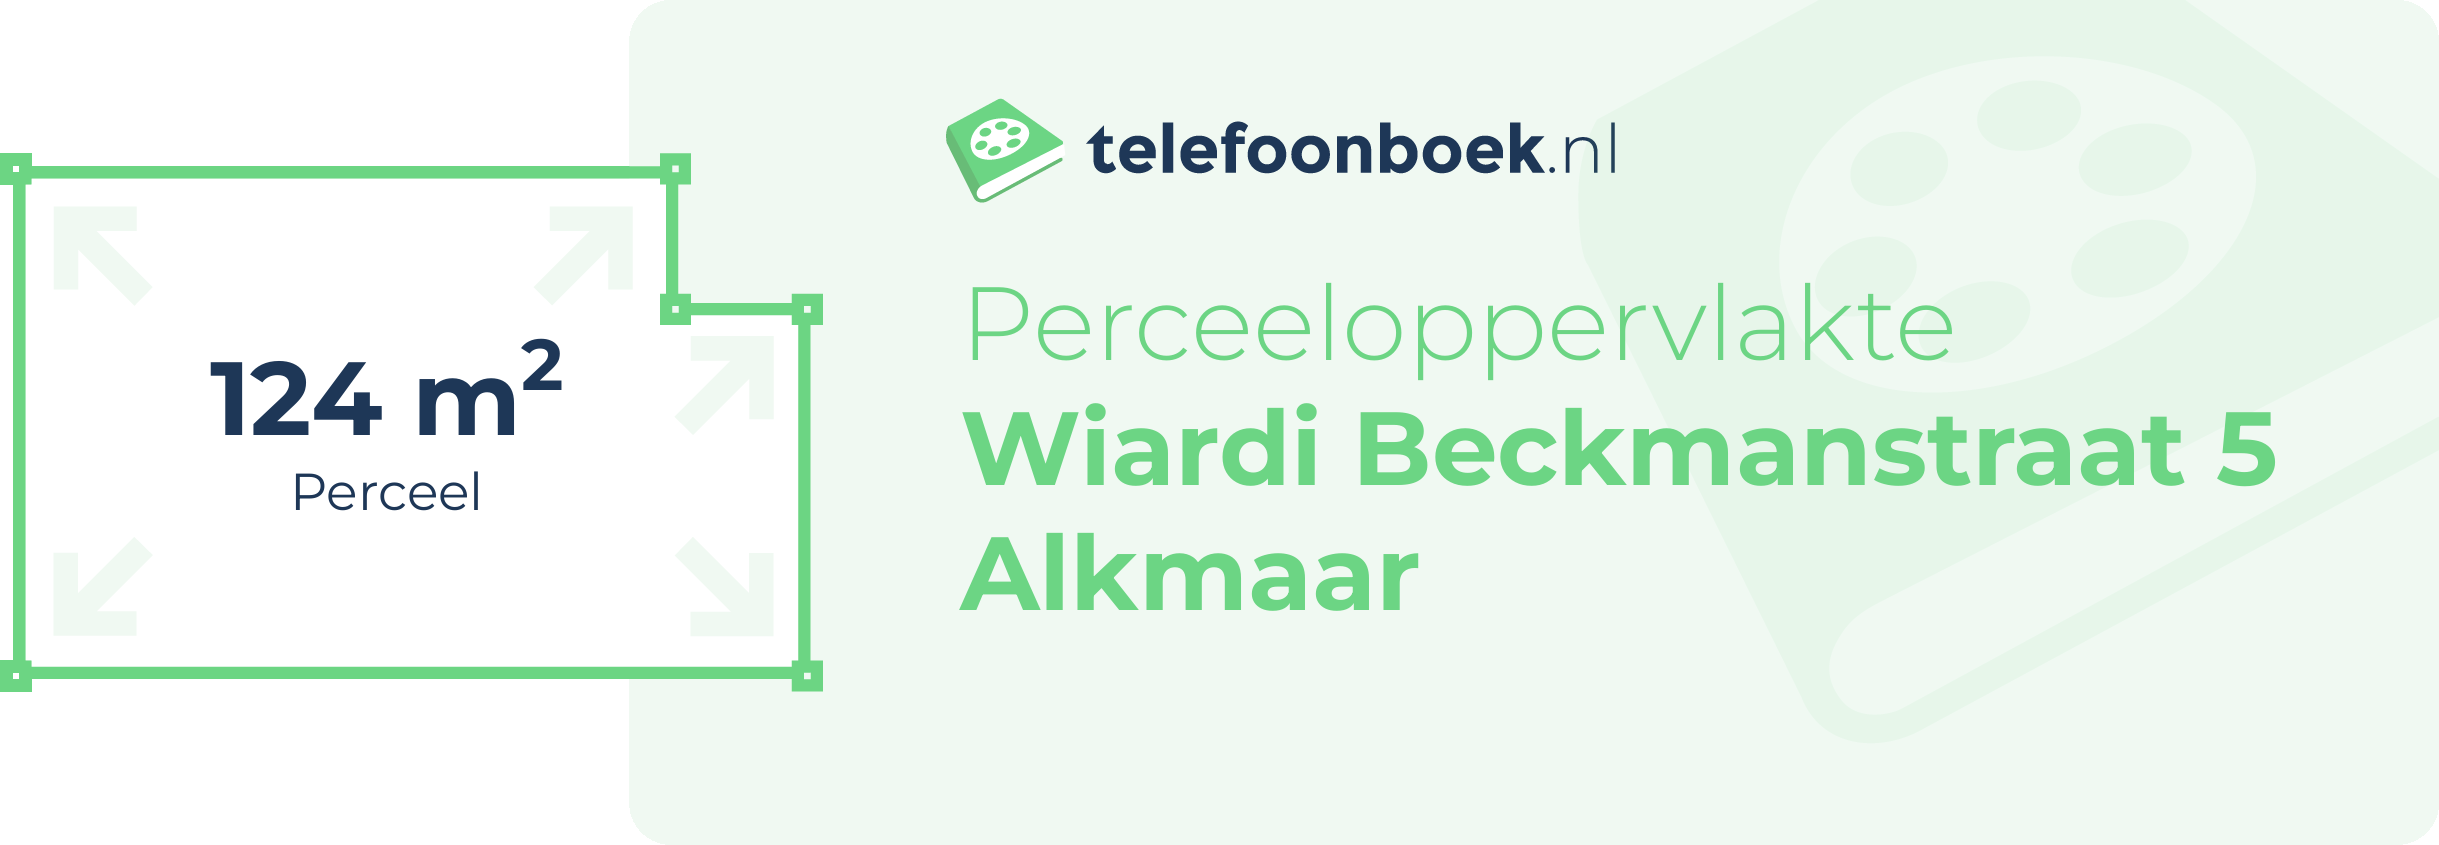 Perceeloppervlakte Wiardi Beckmanstraat 5 Alkmaar